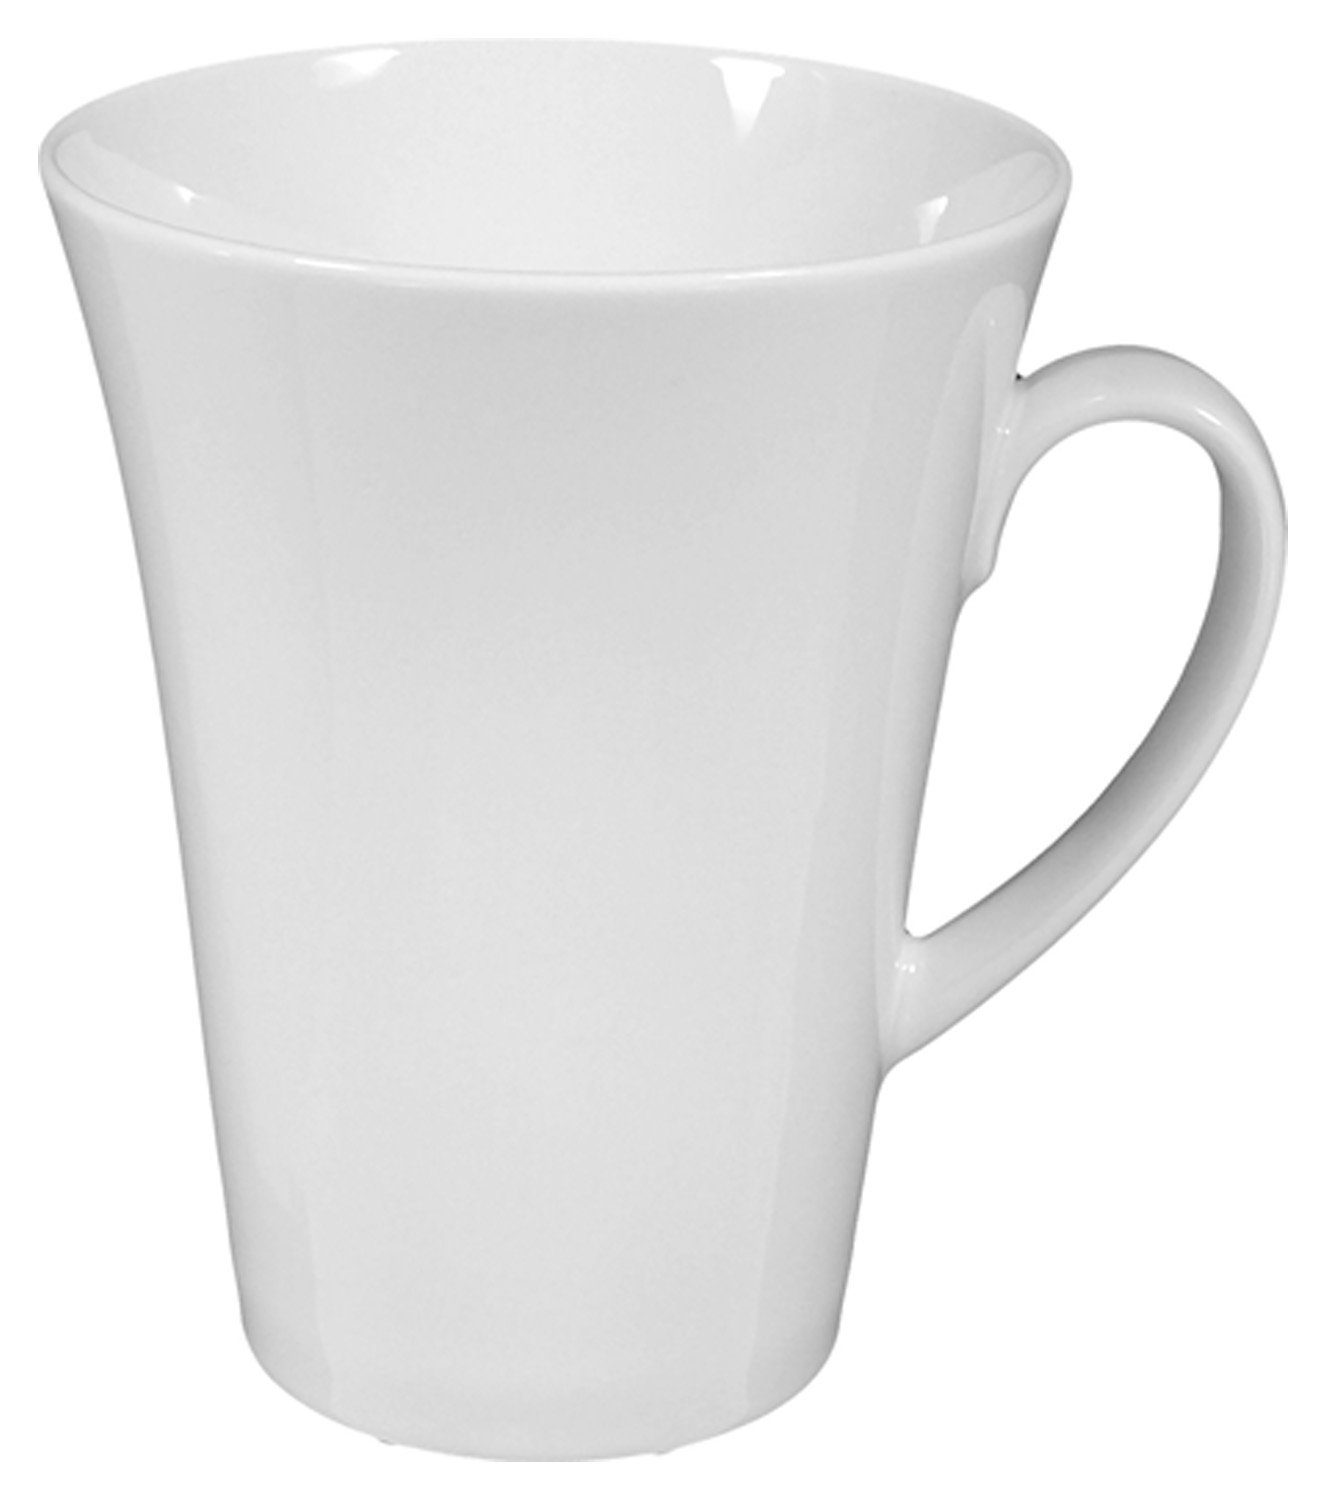 Seltmann Weiden Tasse Kaffeetasse TOP LIFE UNI, 600 ml, Weiß, mit Henkel, Porzellan, Made in Germany, Spülmaschinenfest, Mikrowellengeeignet